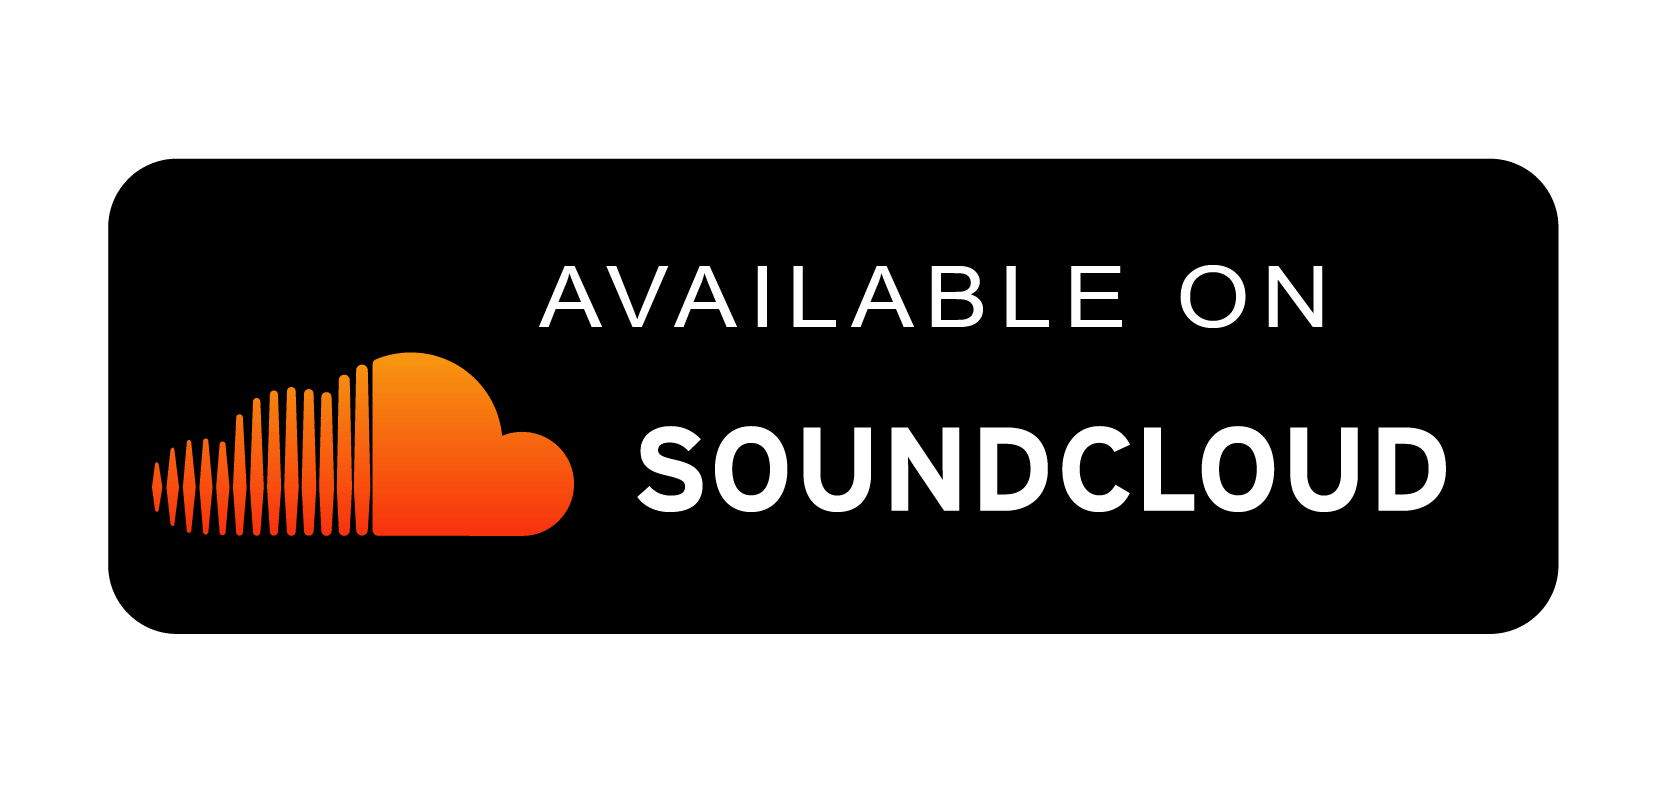 Available in your area. Значок soundcloud. Саундклауд лого. Саундклауд наклейка. Слушайте на soundcloud.